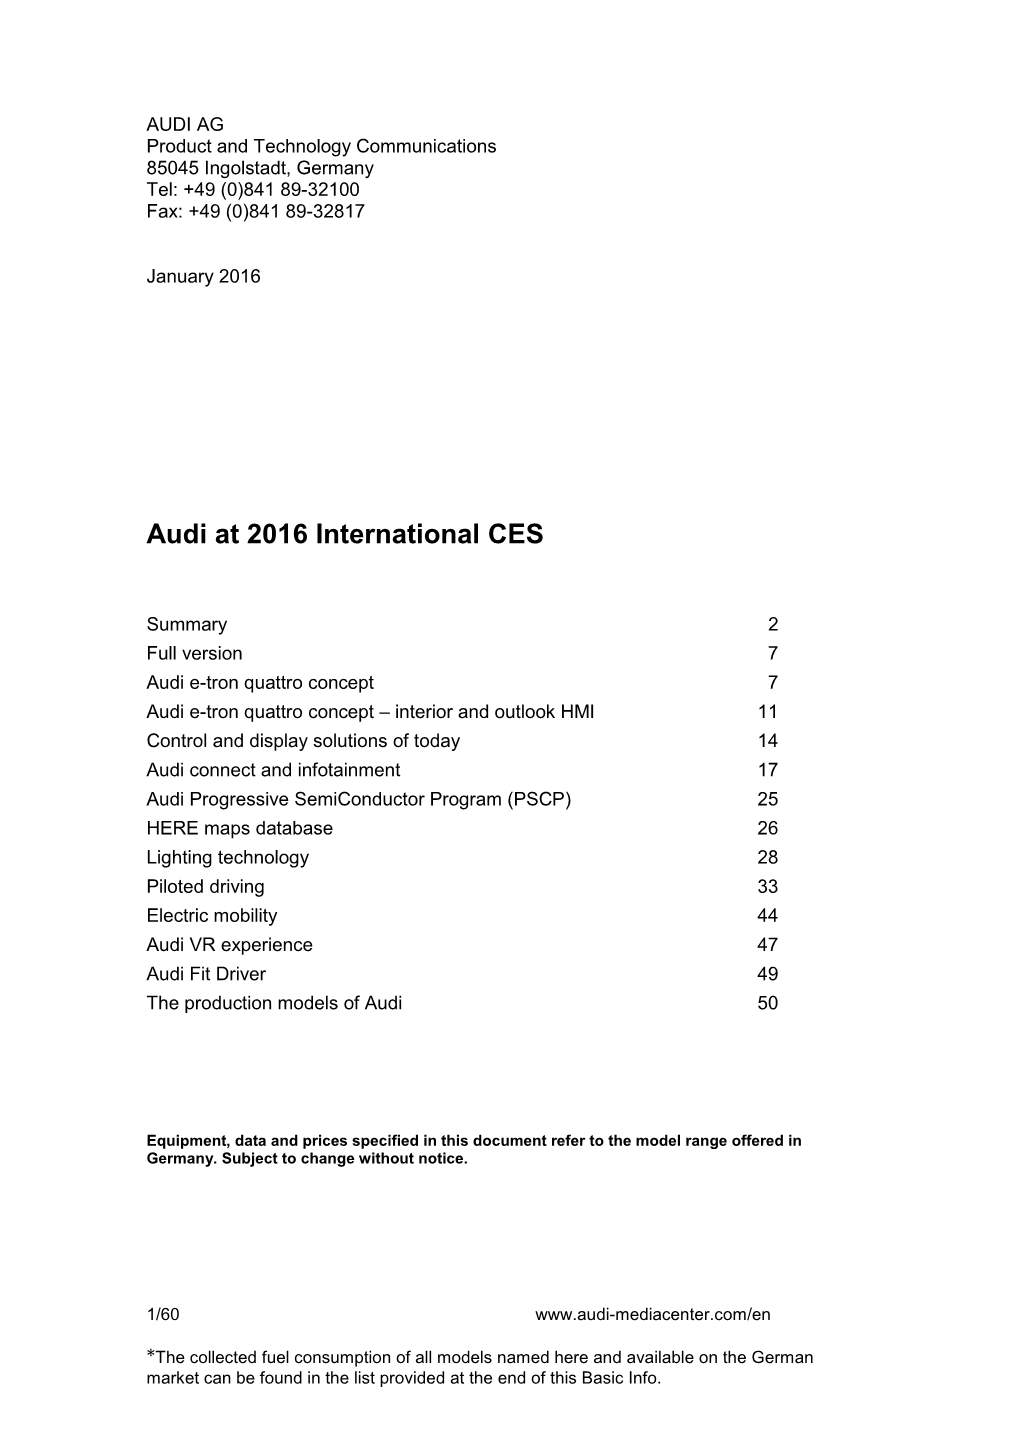 Audi at 2016 International CES